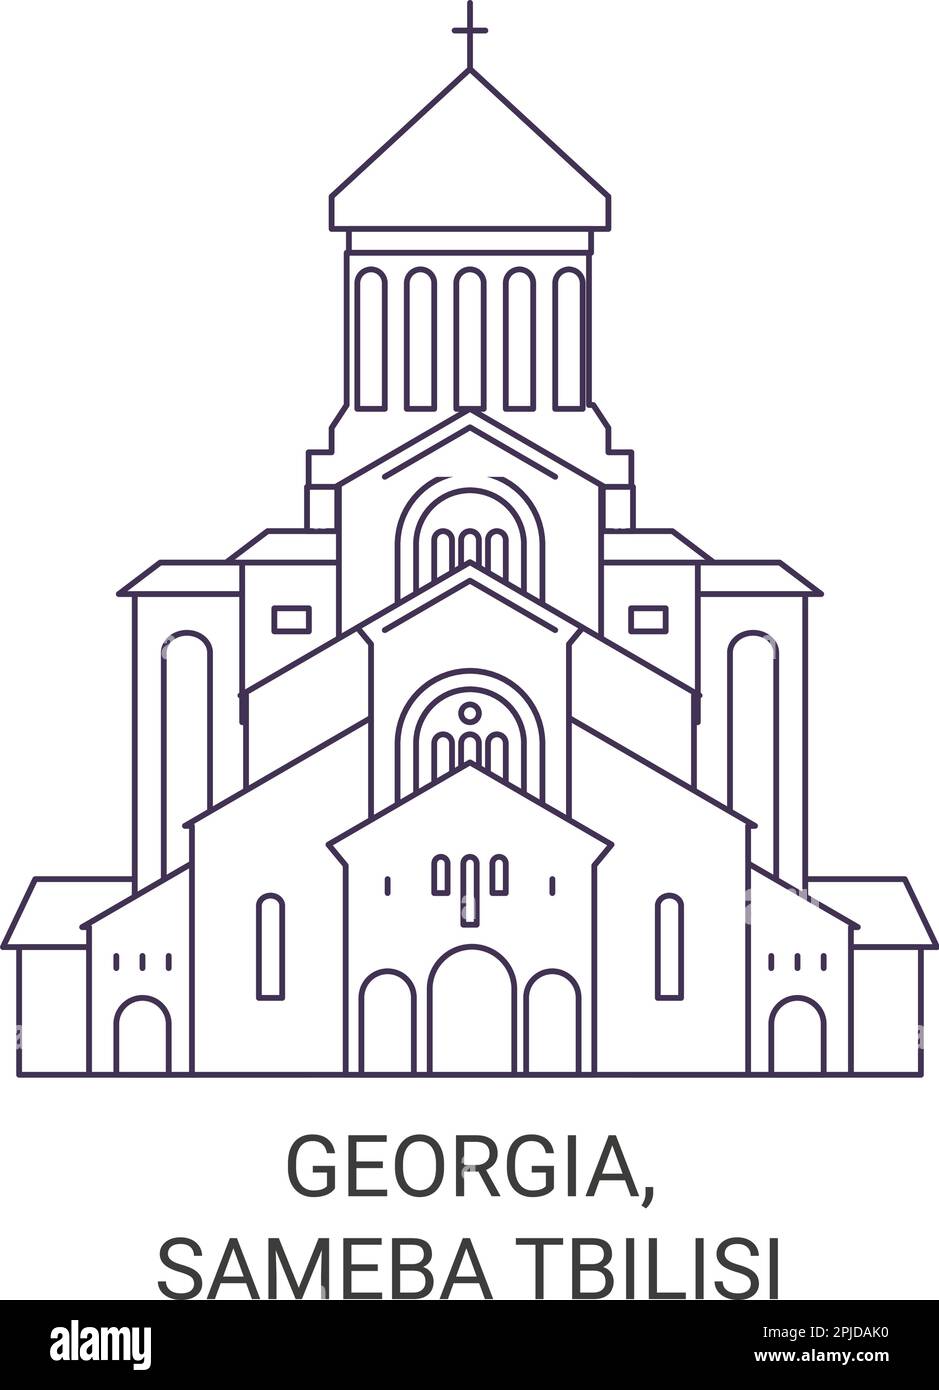 Georgia, Sameba Tbilisi travel landmark vector illustration Stock Vector